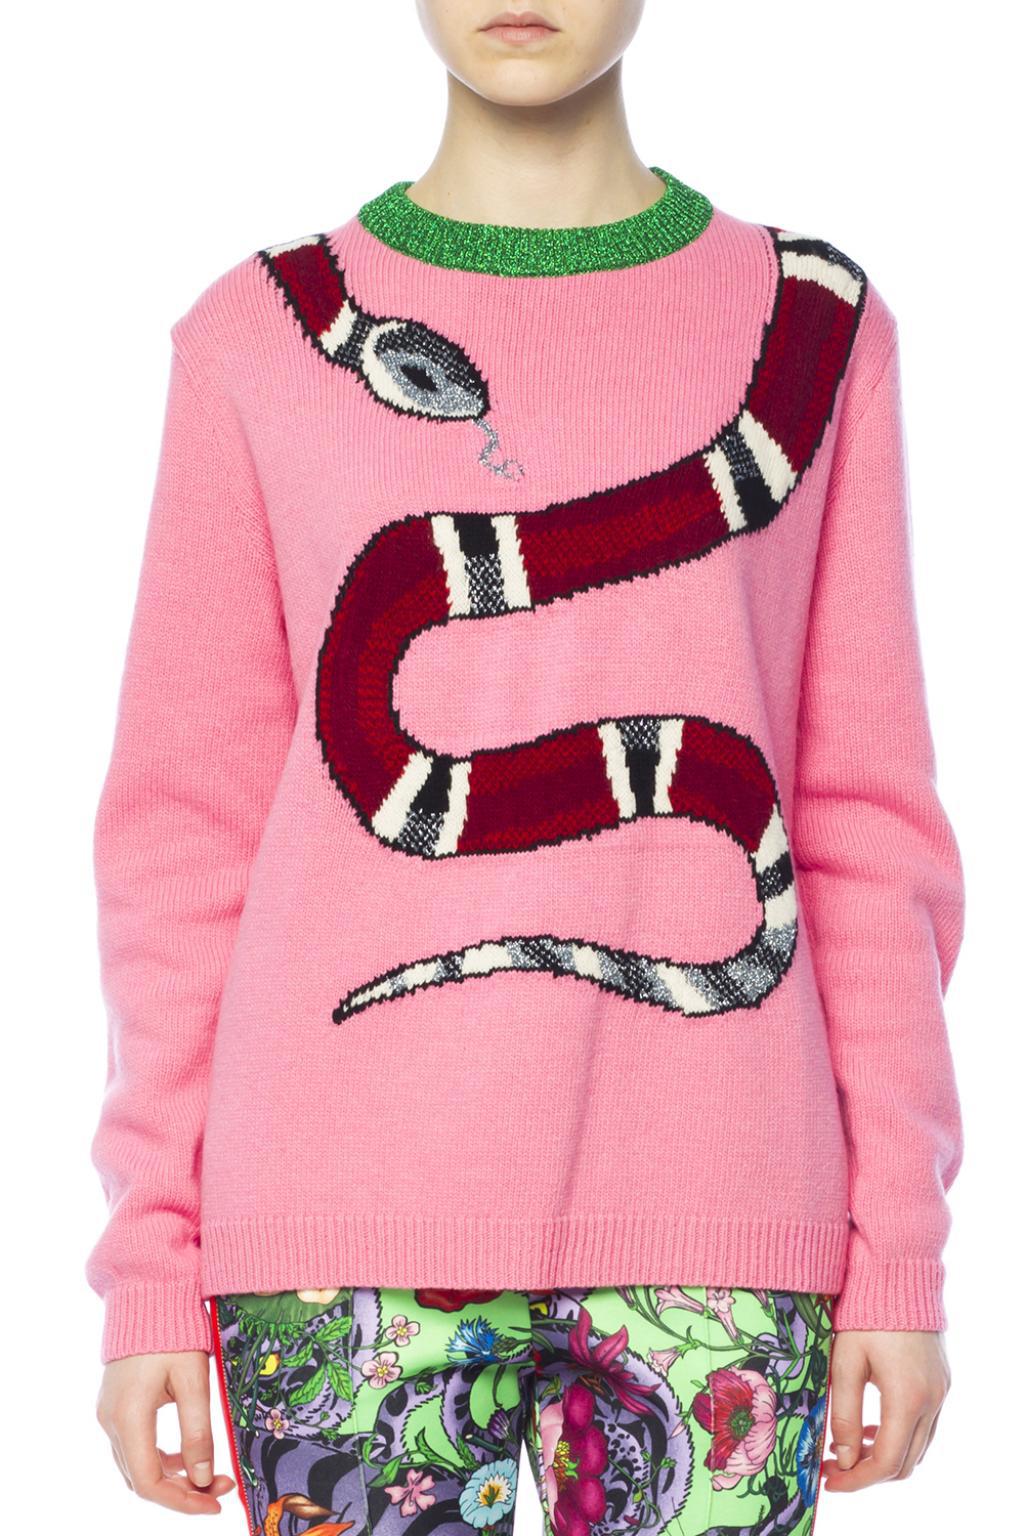 snake sweater gucci